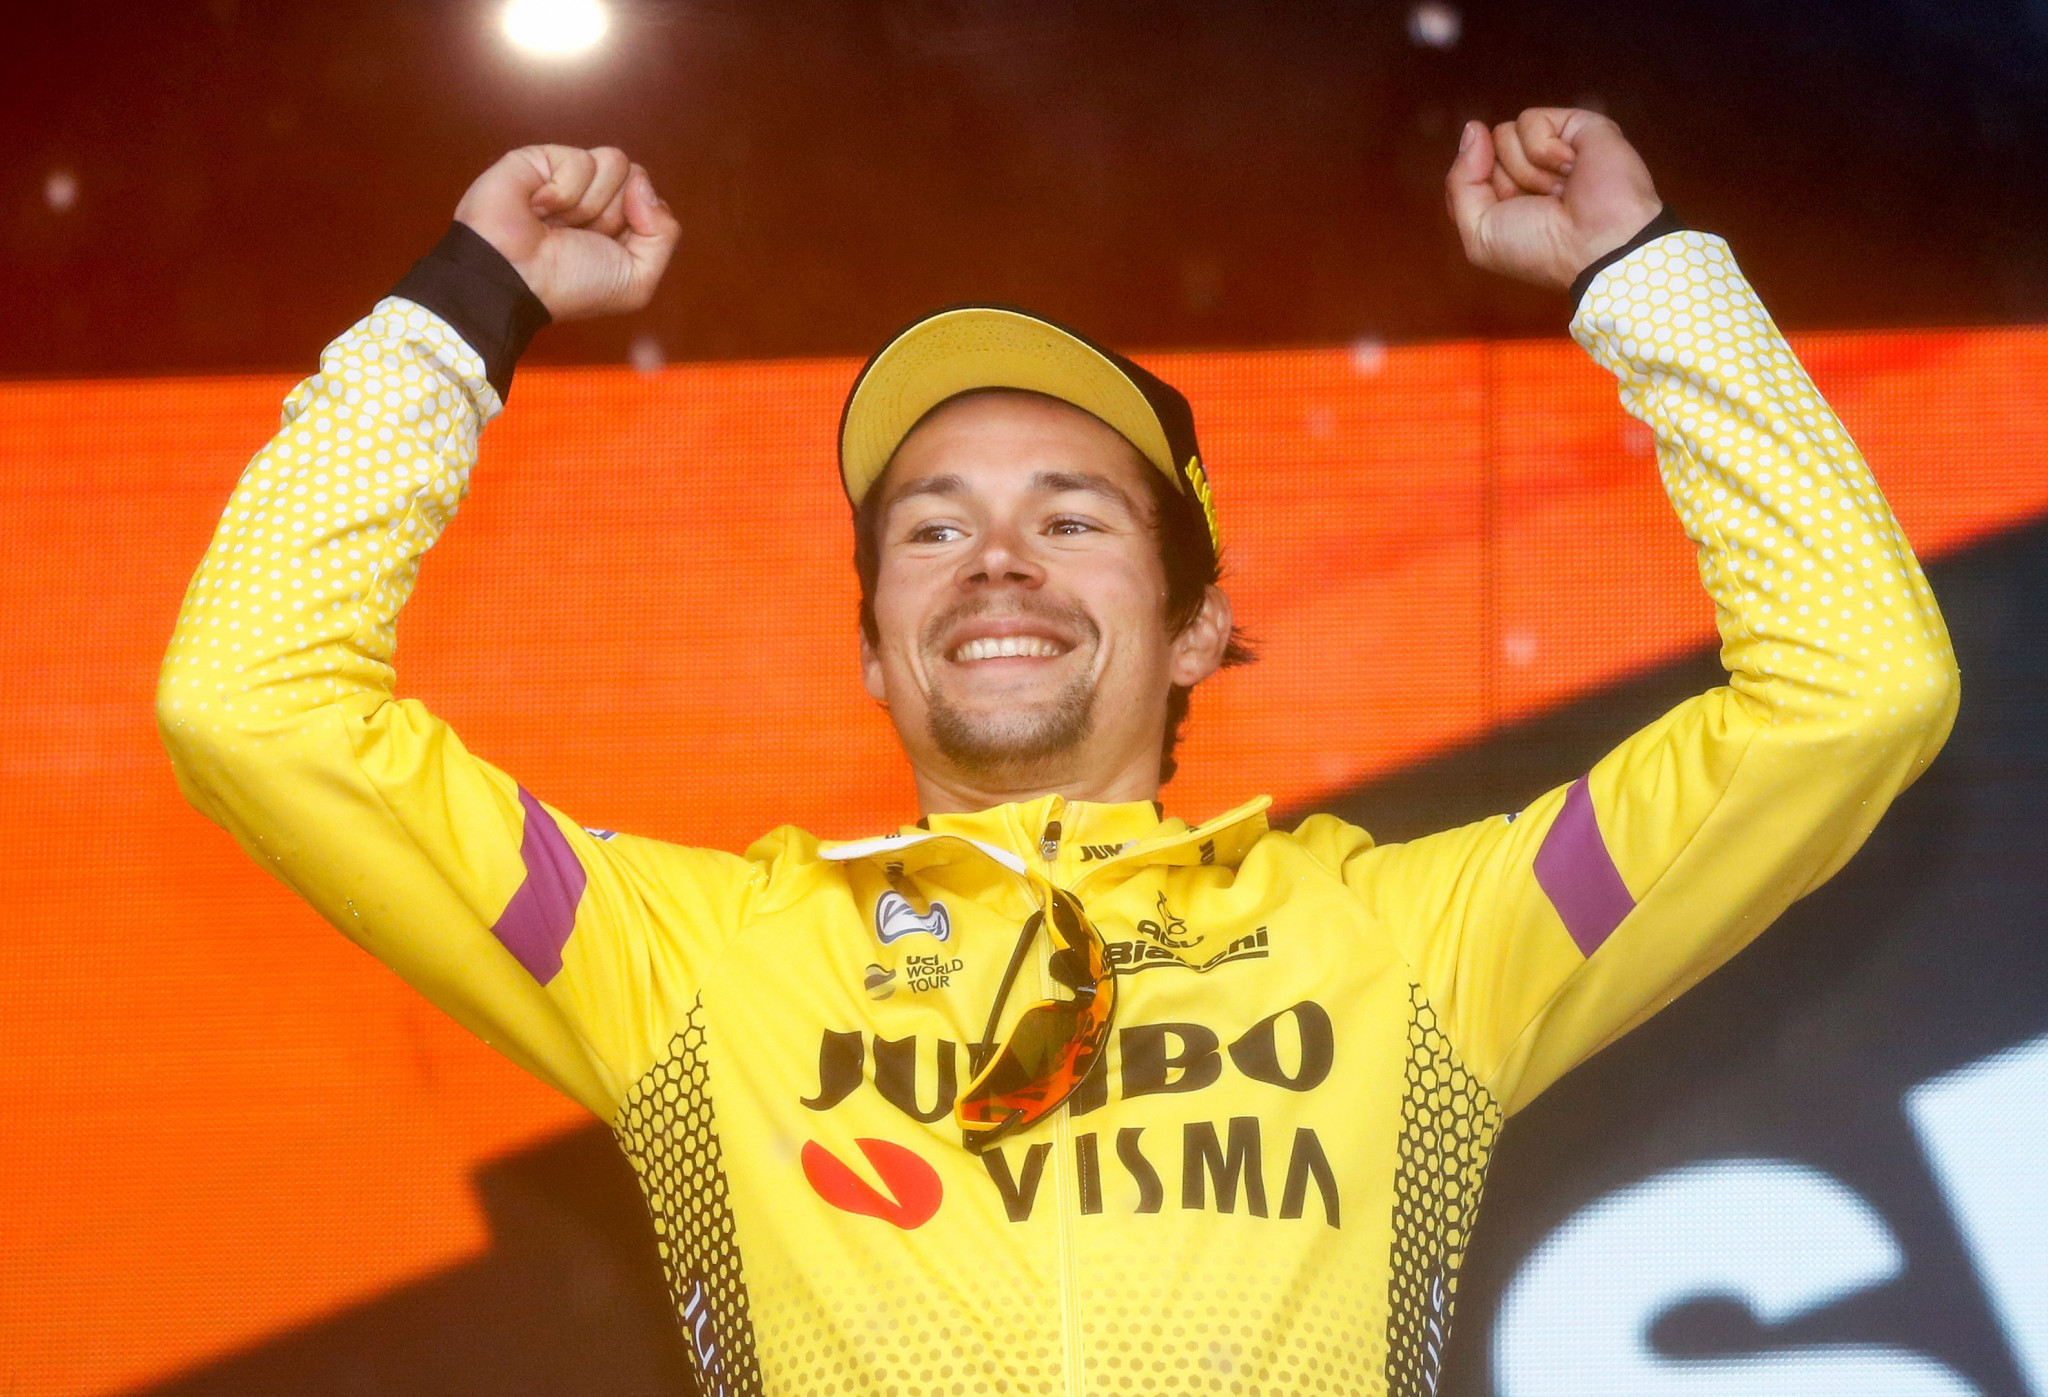  Roglič regains grip on Giro d’Italia as he wins ninth stage time trial